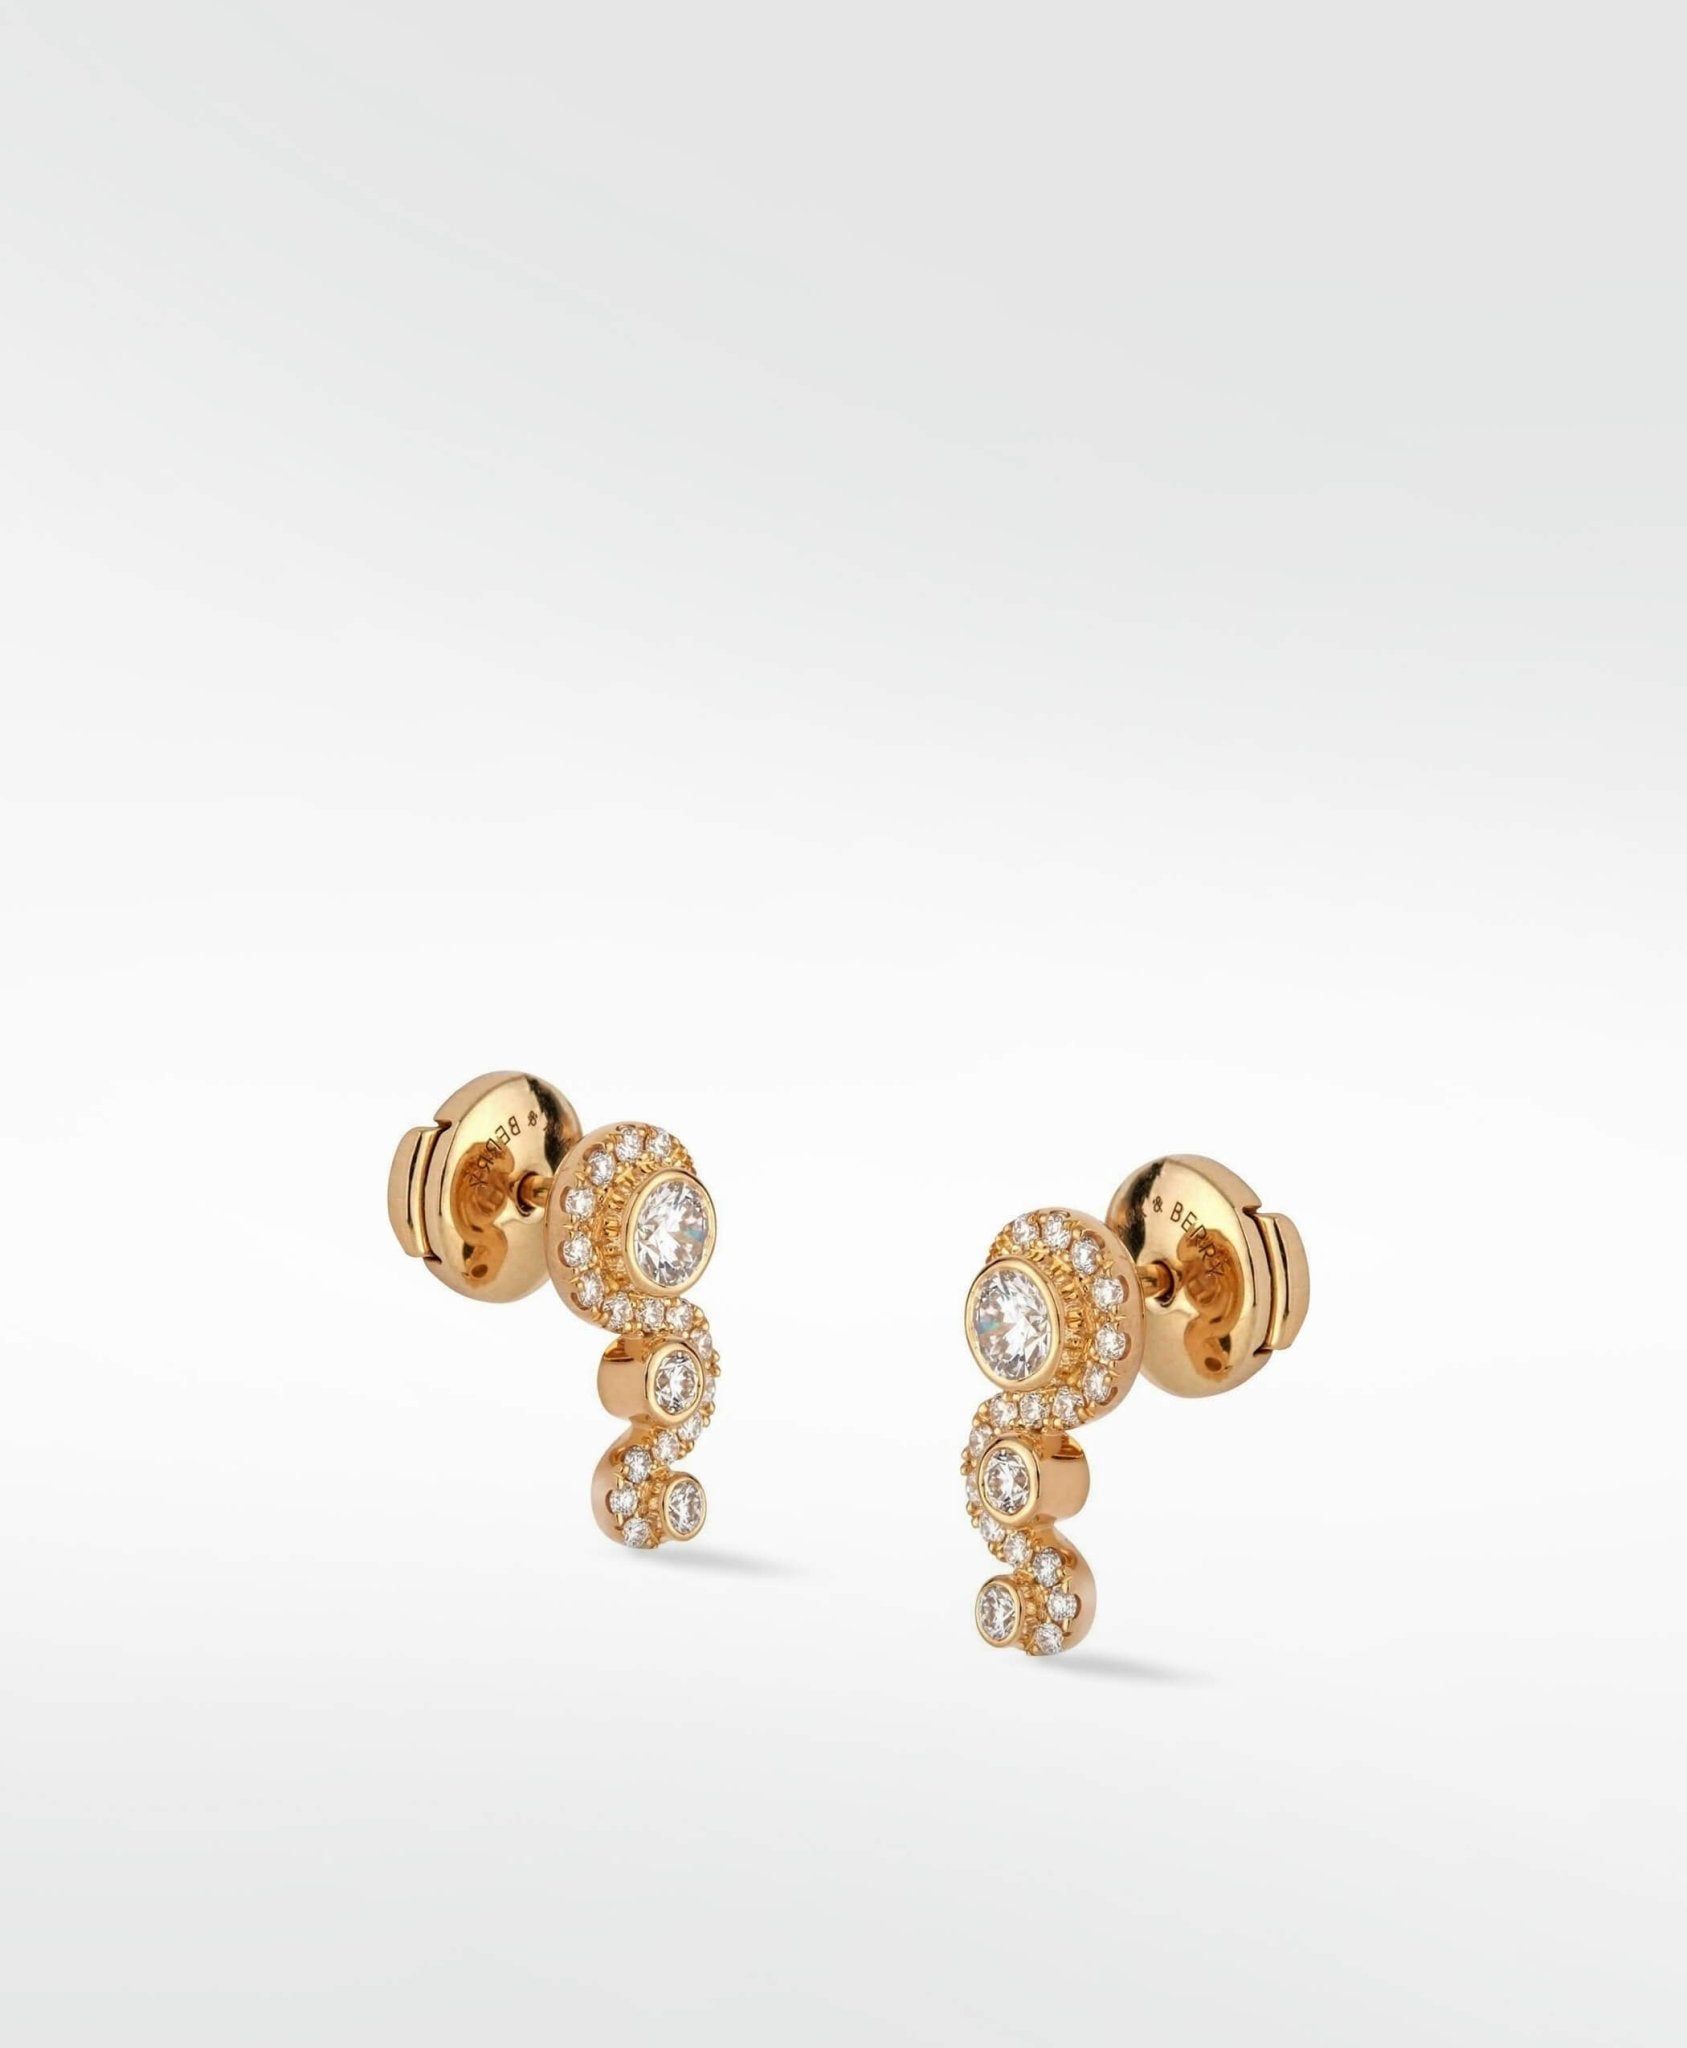 Wave Diamond Stud Earrings in 18K Gold - Lark and Berry